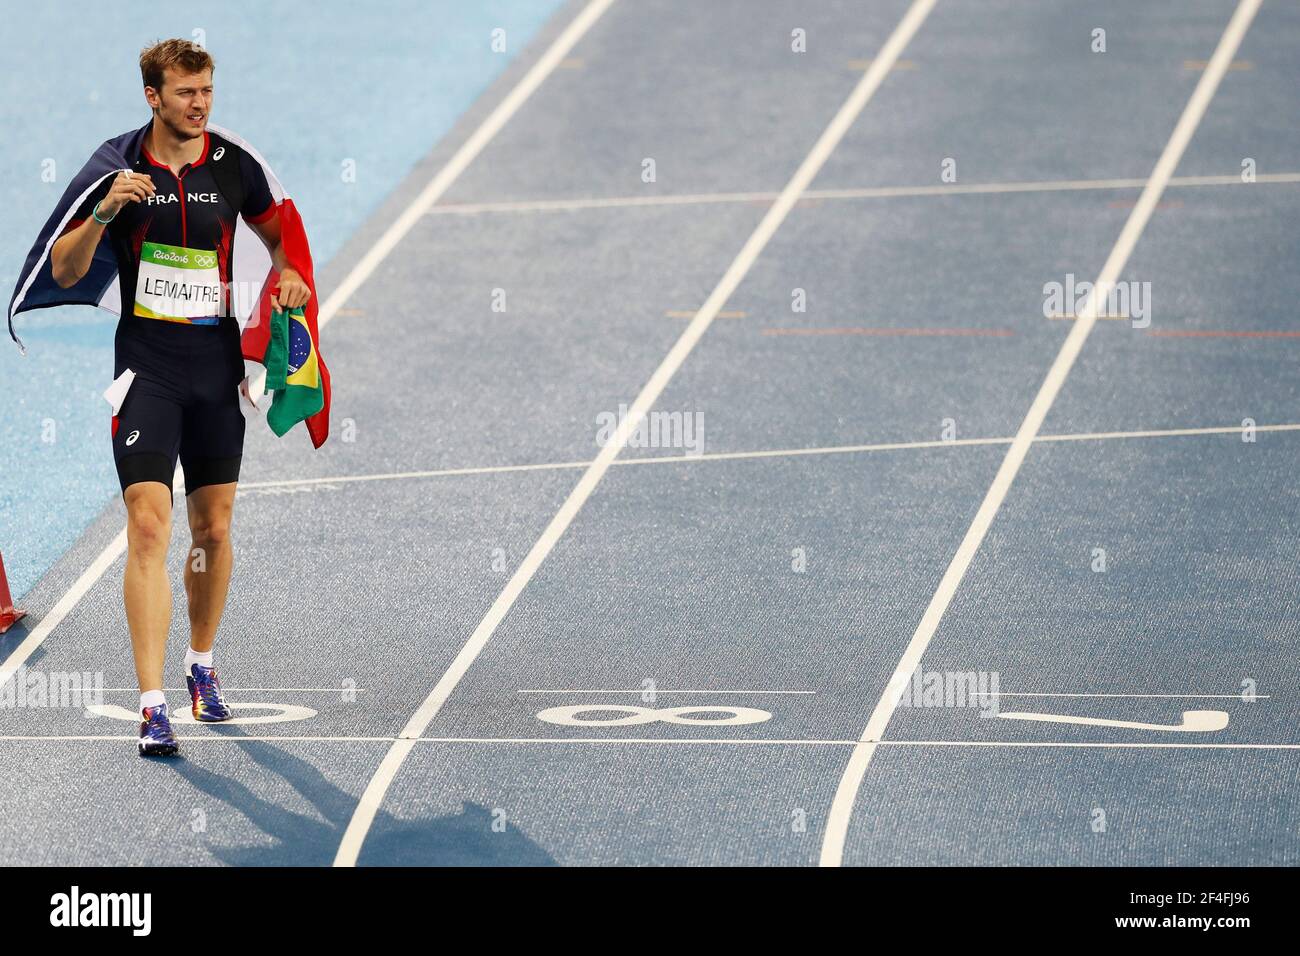 Christophe Lemaitre of France running wins bronze medal 200m sprint race, Rio 2016 Summer Olympic Games. Stock Photo